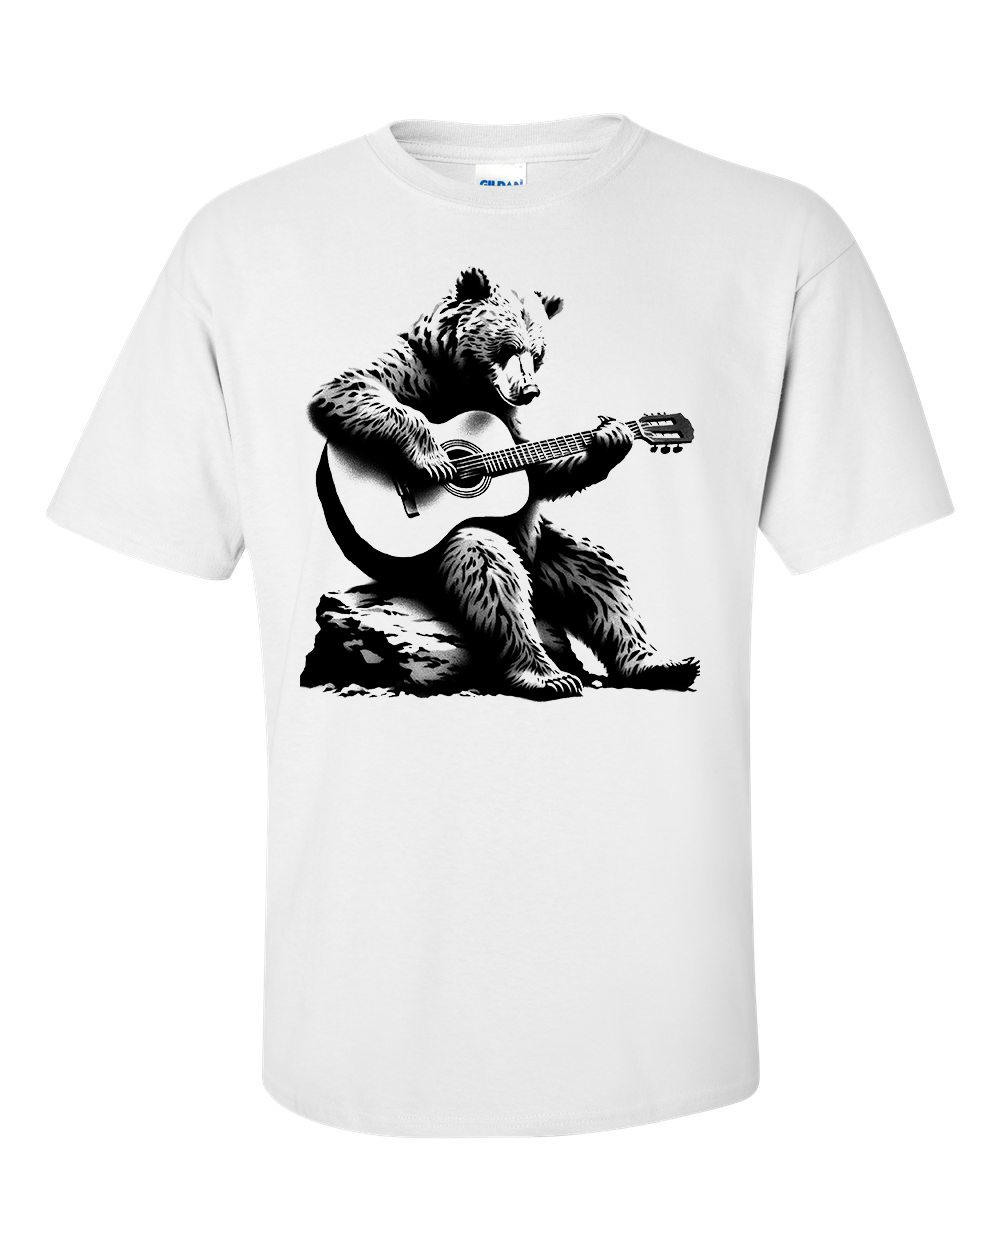 Bear Guitar T-Shirt,  Bear Playing Guitar, Guitarist Shirt